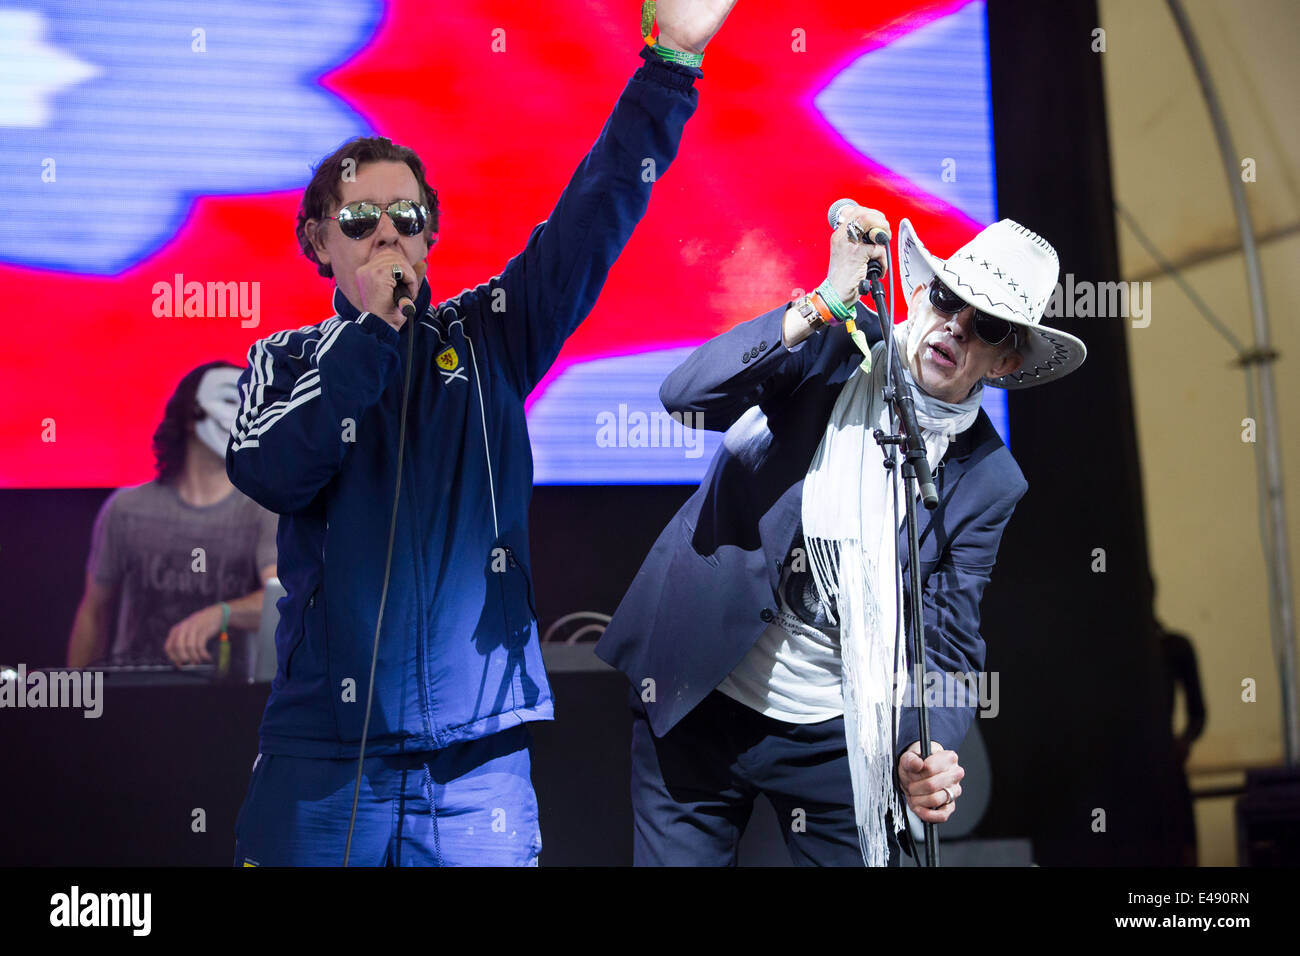 Rob Spragg & Jake Black form Alabama 3 at the Glade stage of Glastonbury Festival 2014 Stock Photo